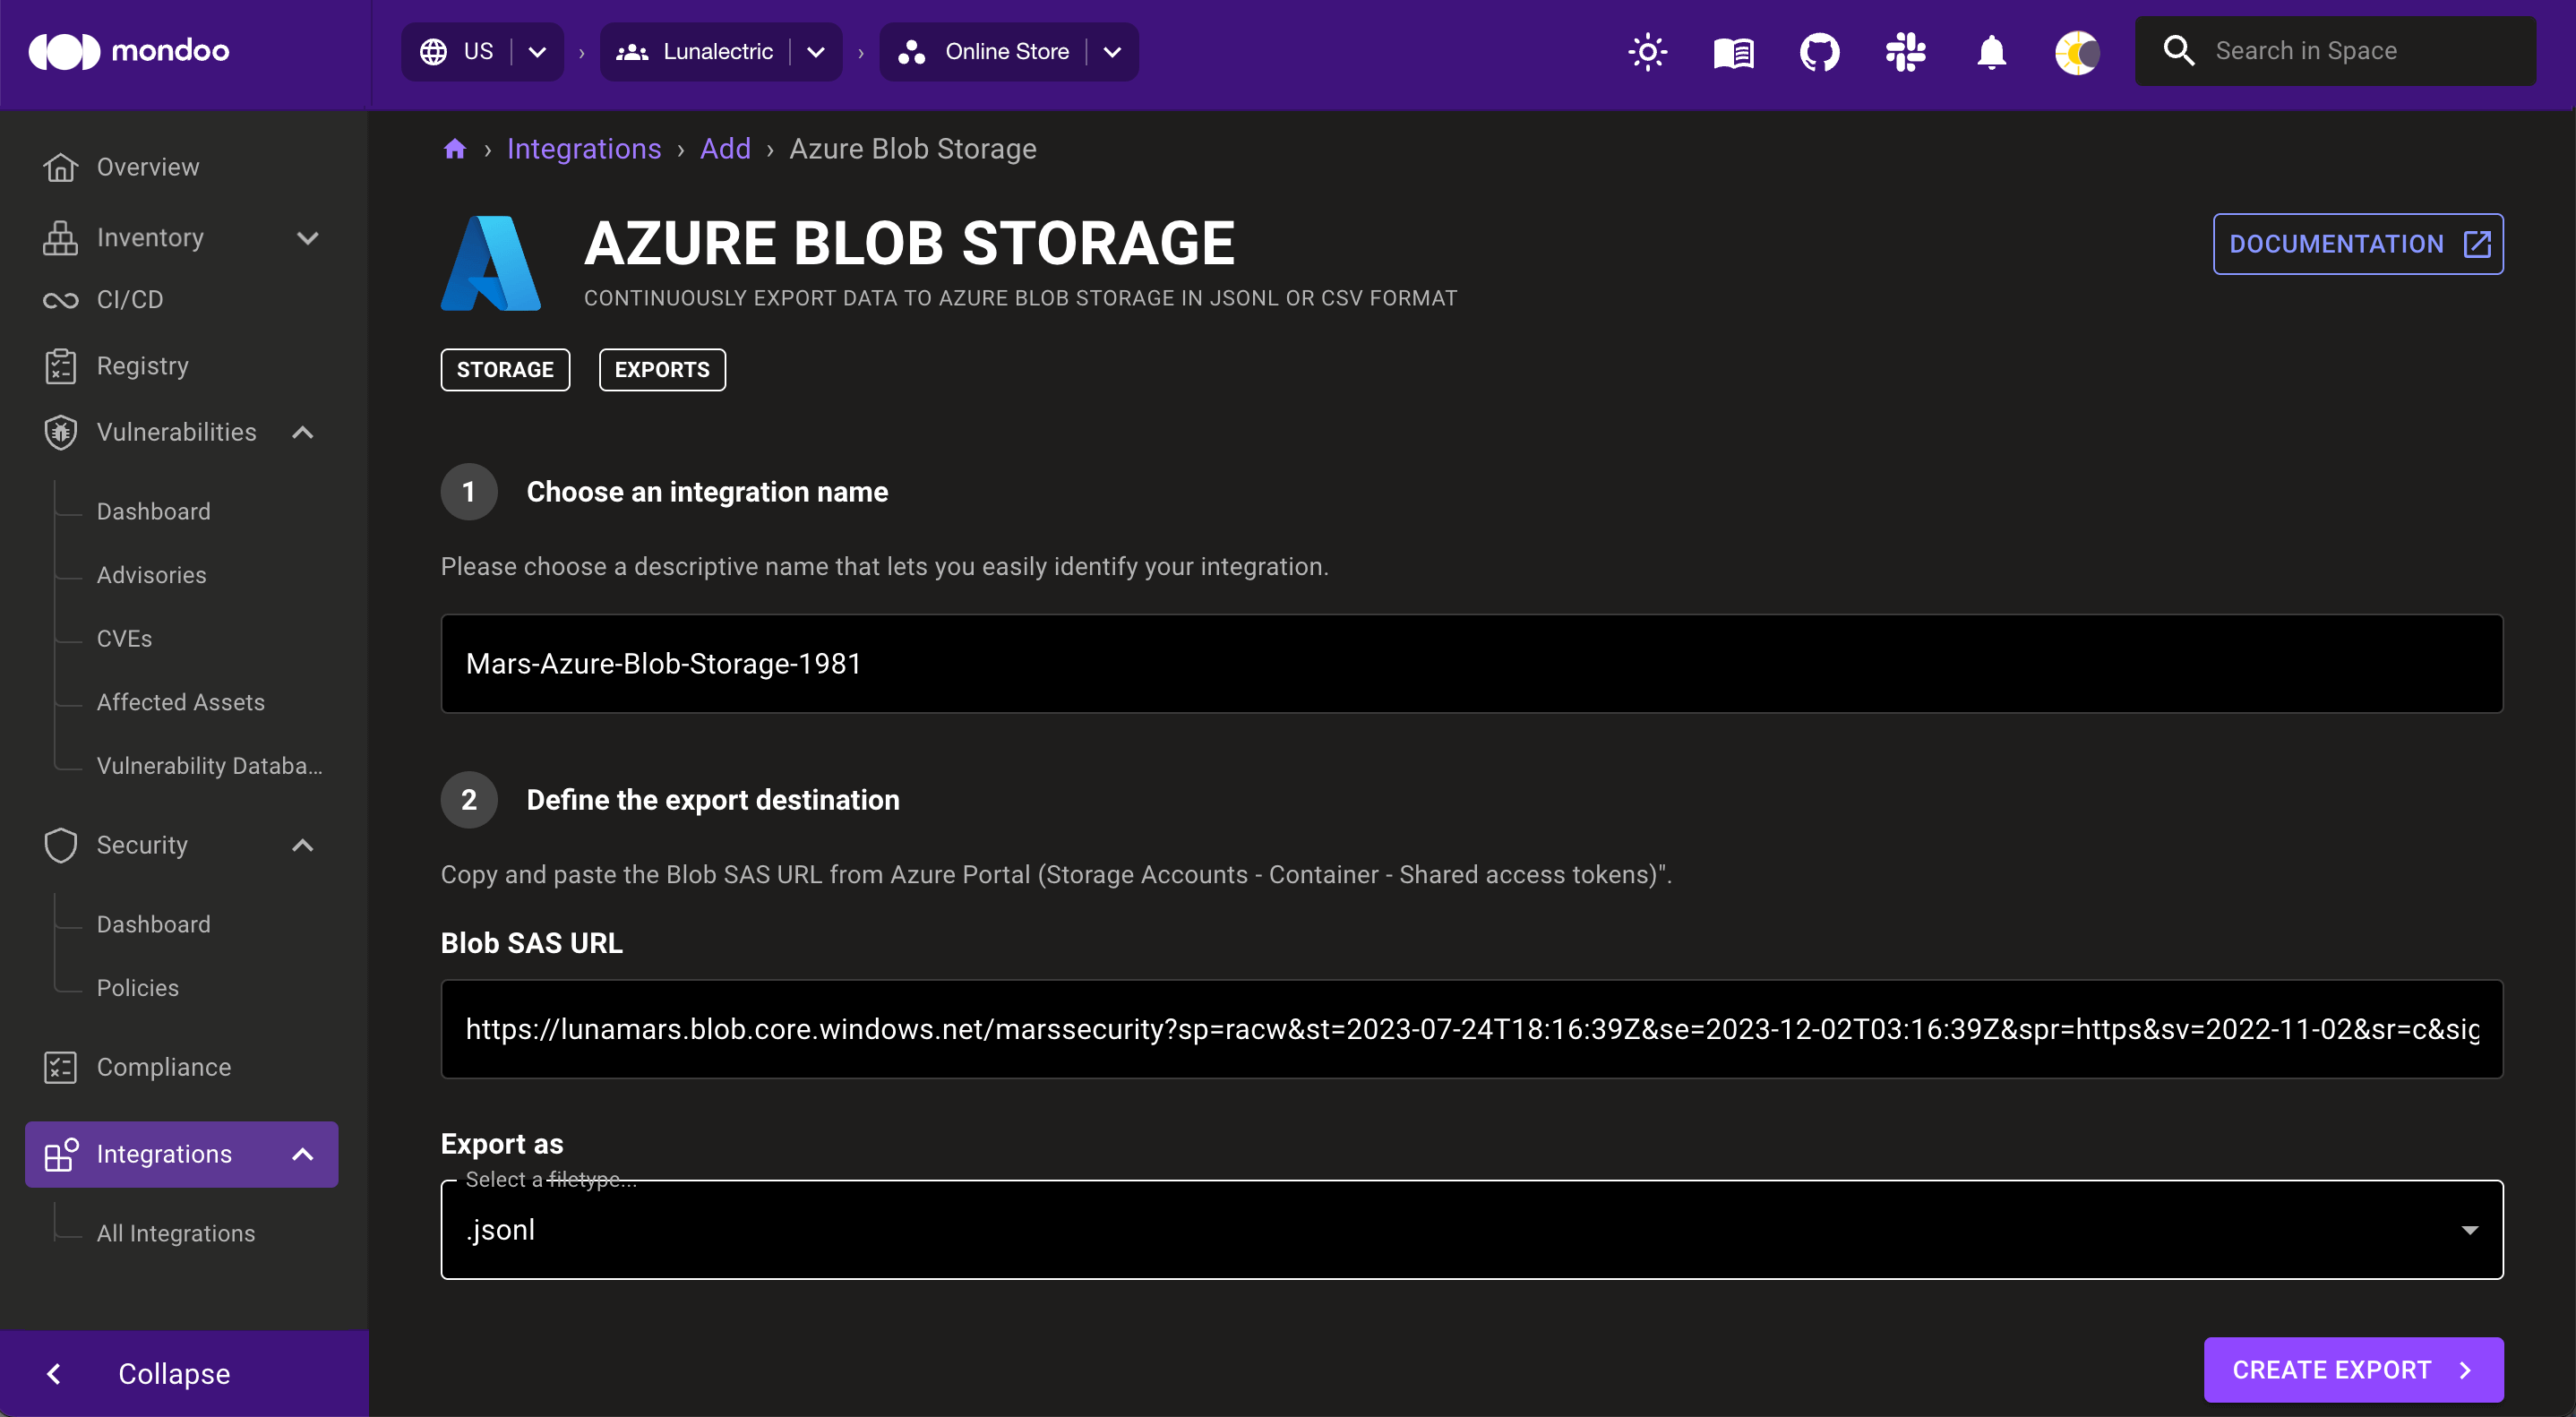 Add an Azure Blob Storage export integration in Mondoo